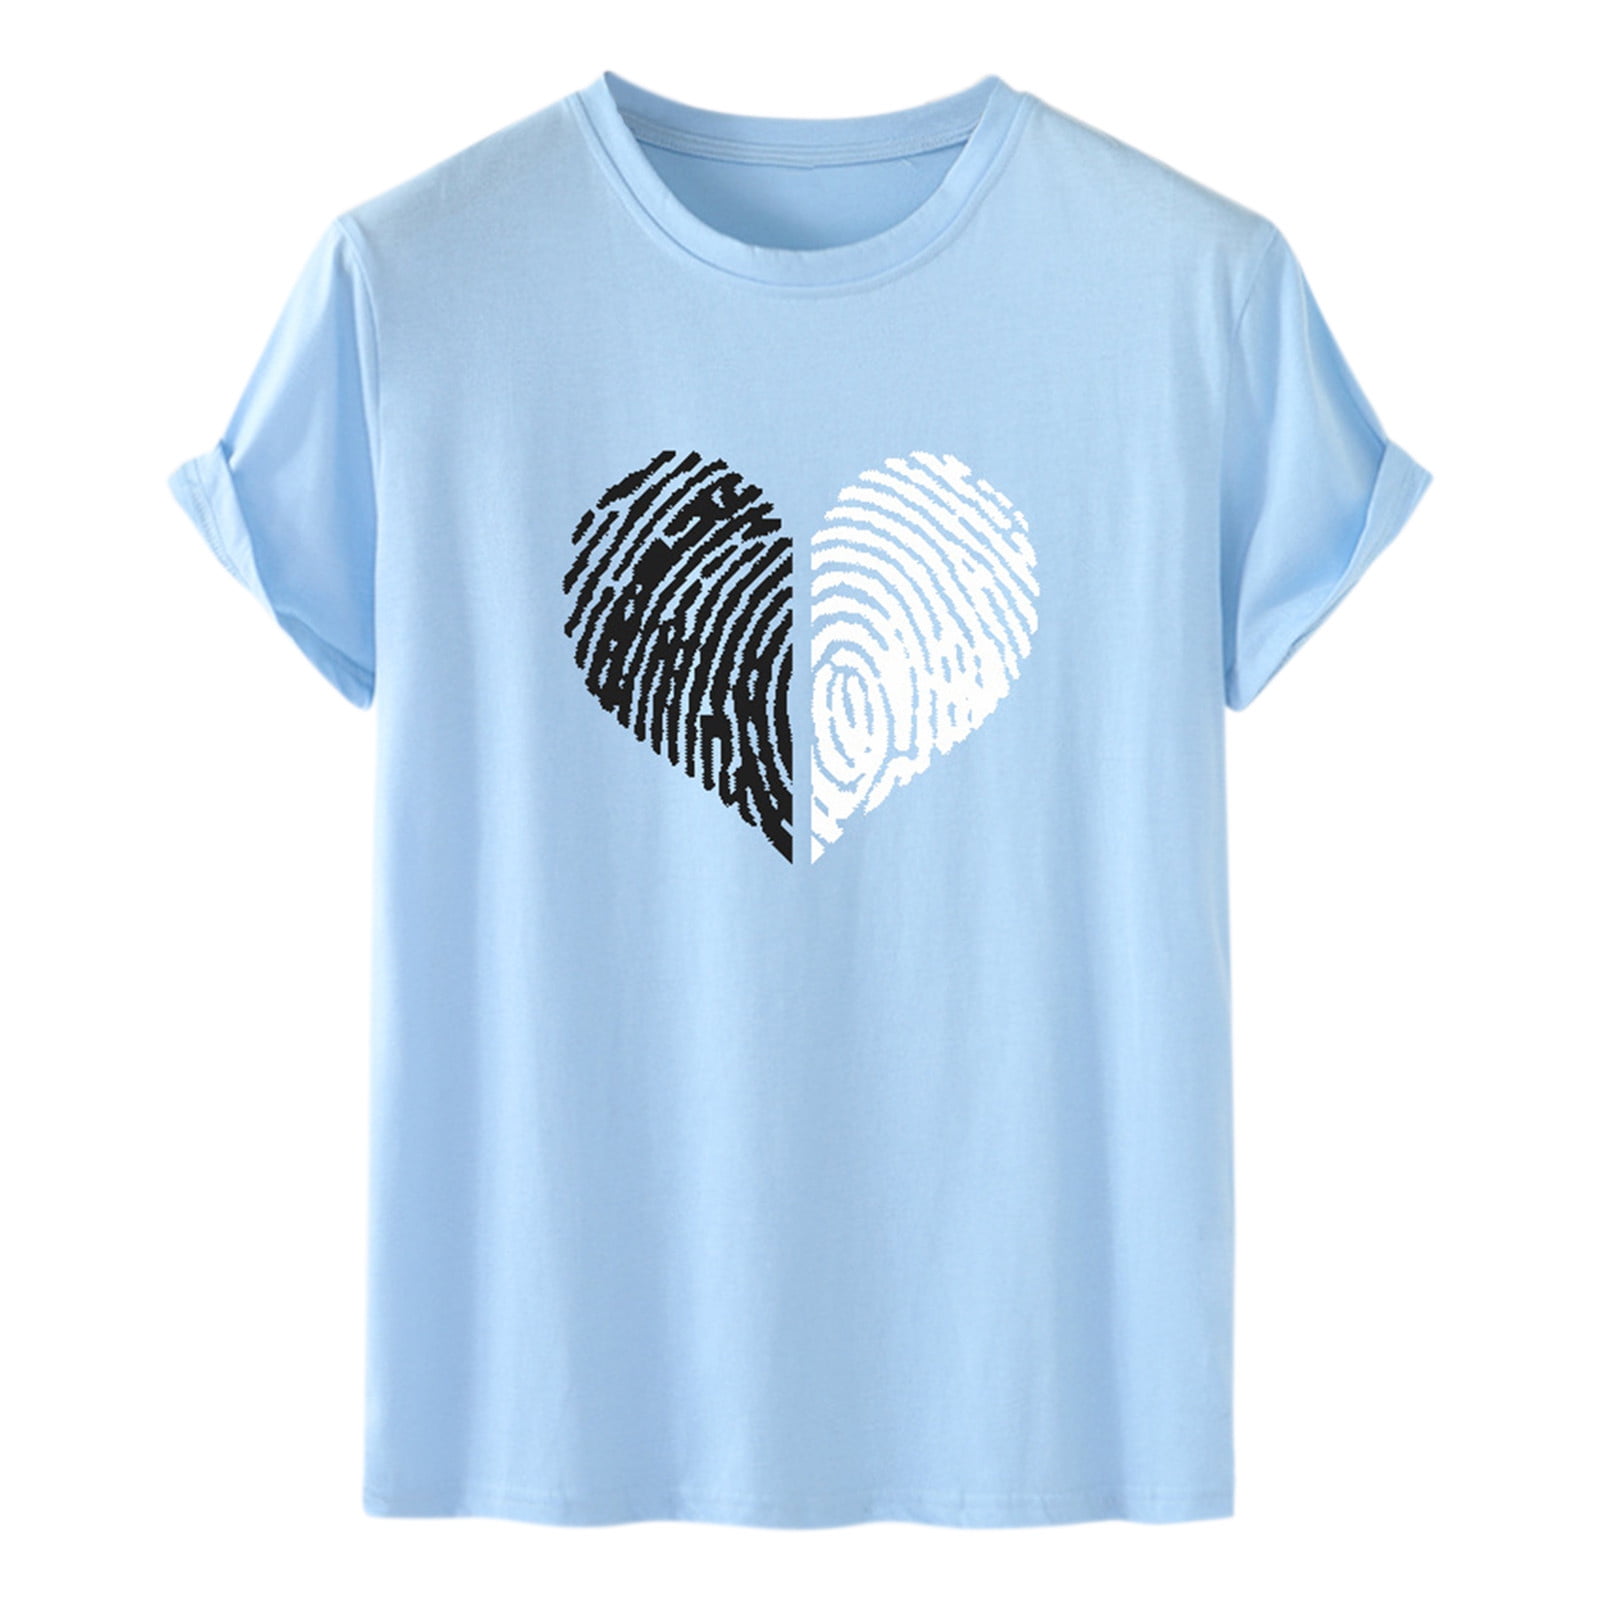 VSSSJ Men Casual Shirts Fitted Heart Shape Print Round Neck Short